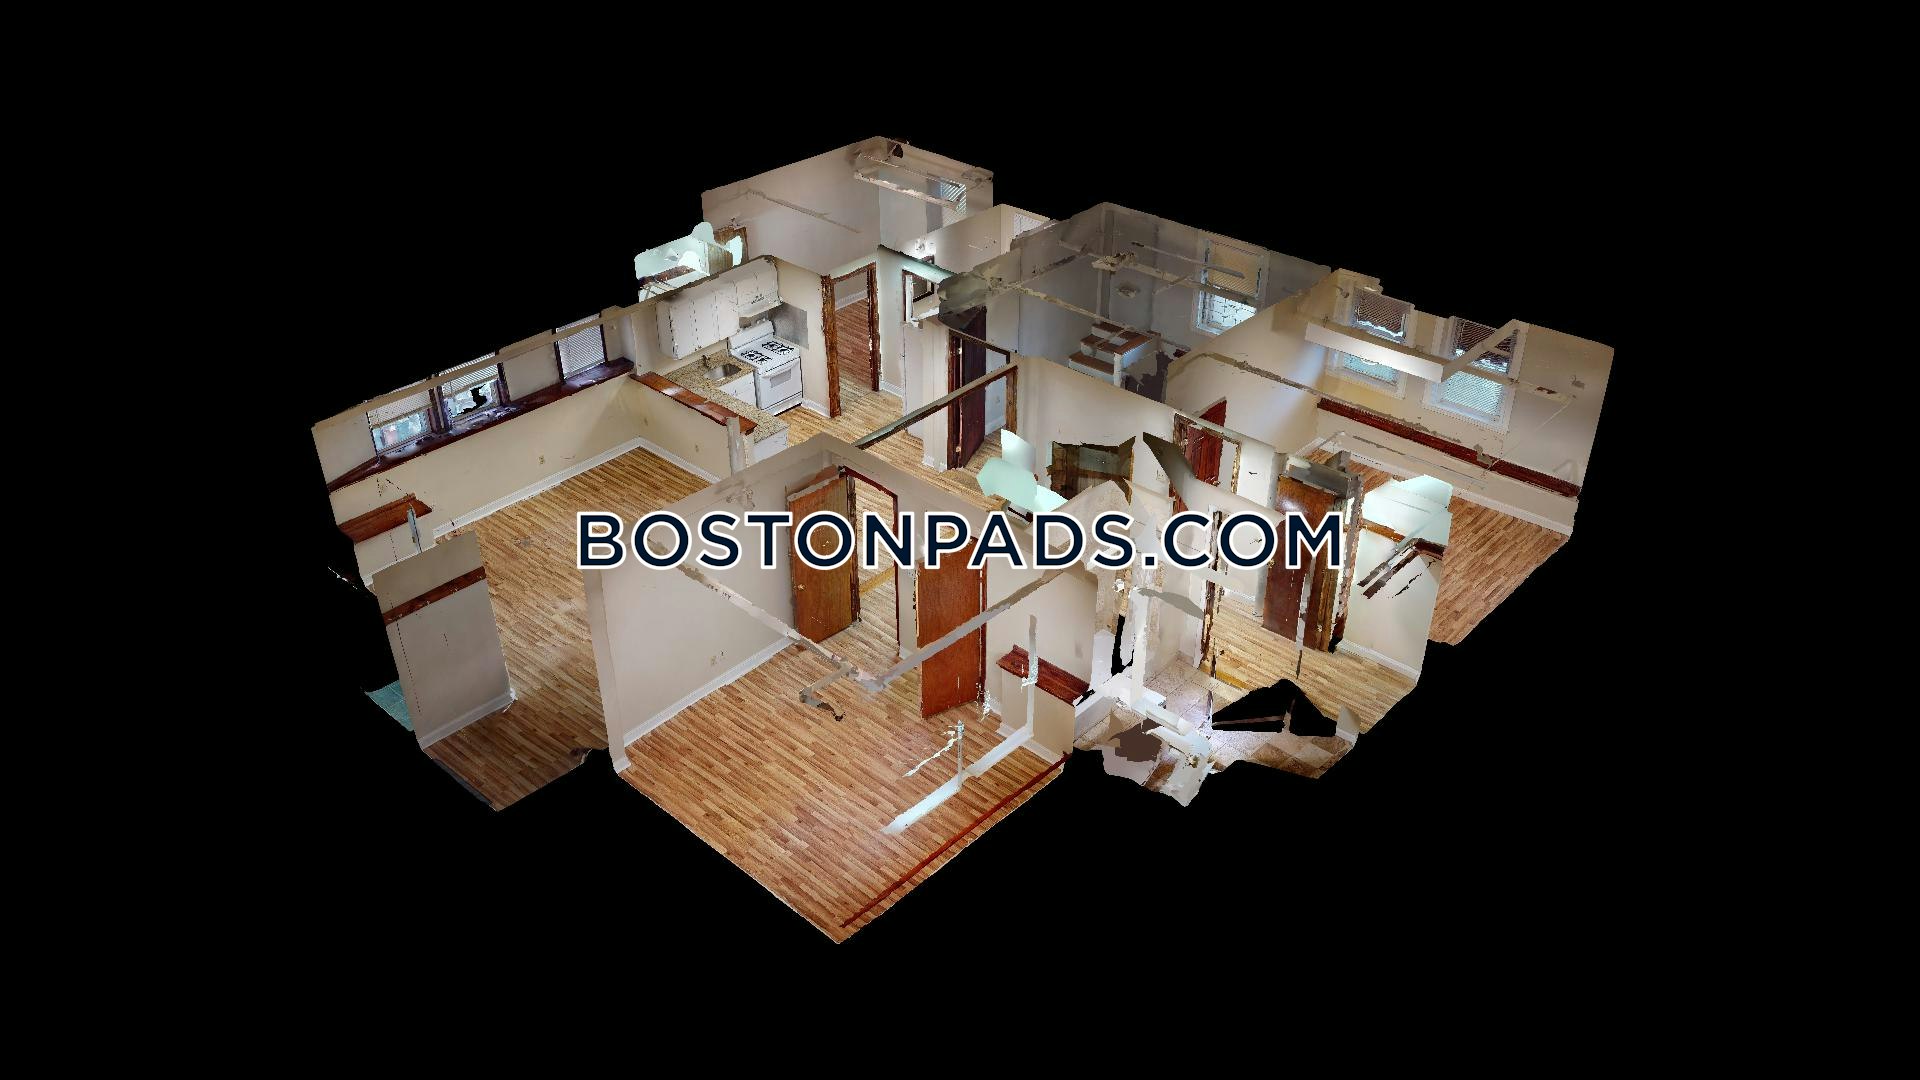 Boston - $4,300